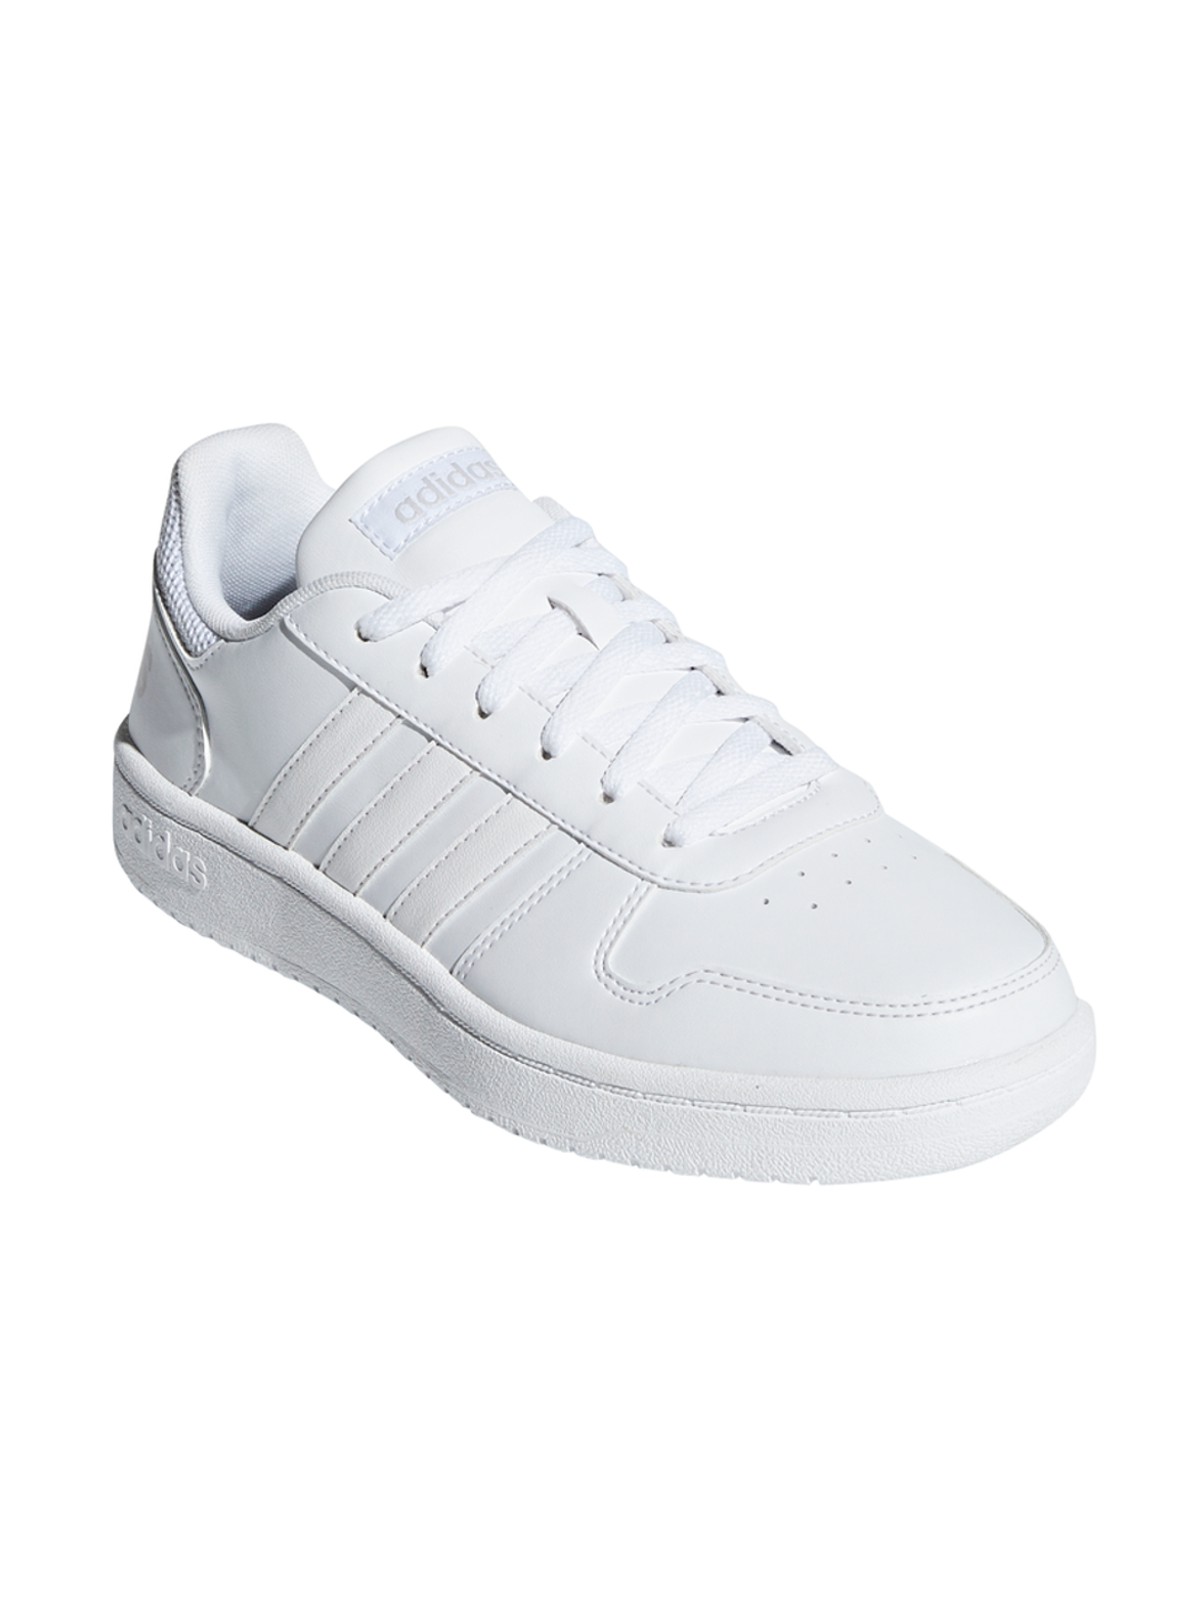 طابعة ملابس Tennis blanches femme adidas (36-41) - DistriCenter طابعة ملابس